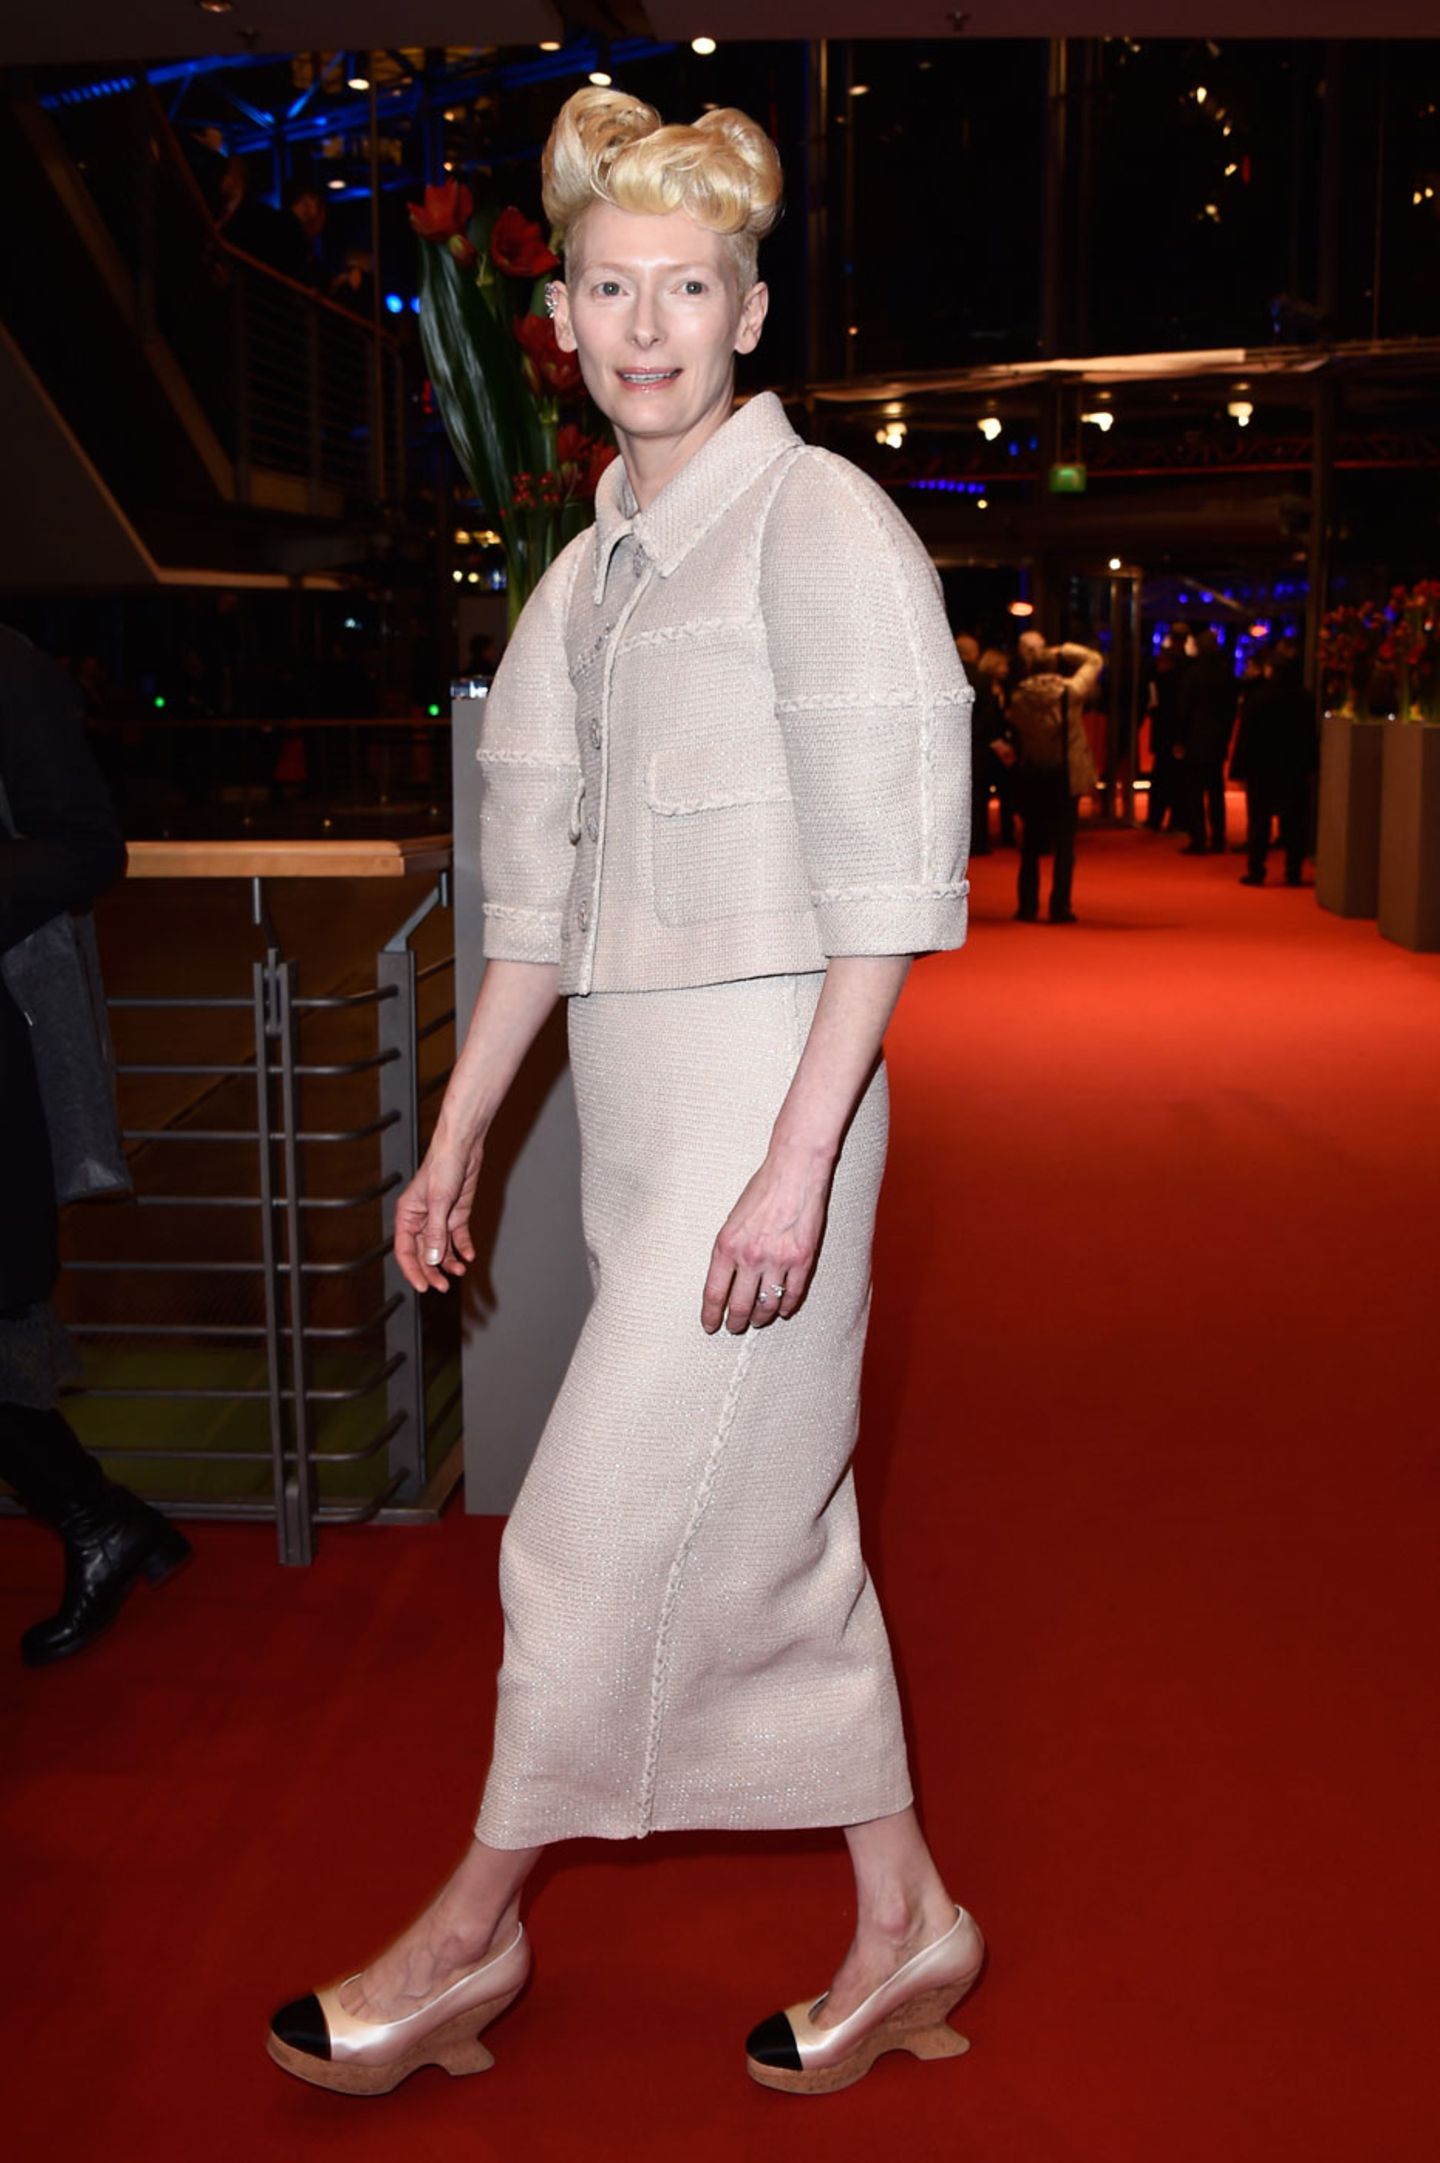 Berlinale 2016: Tilda Swinton